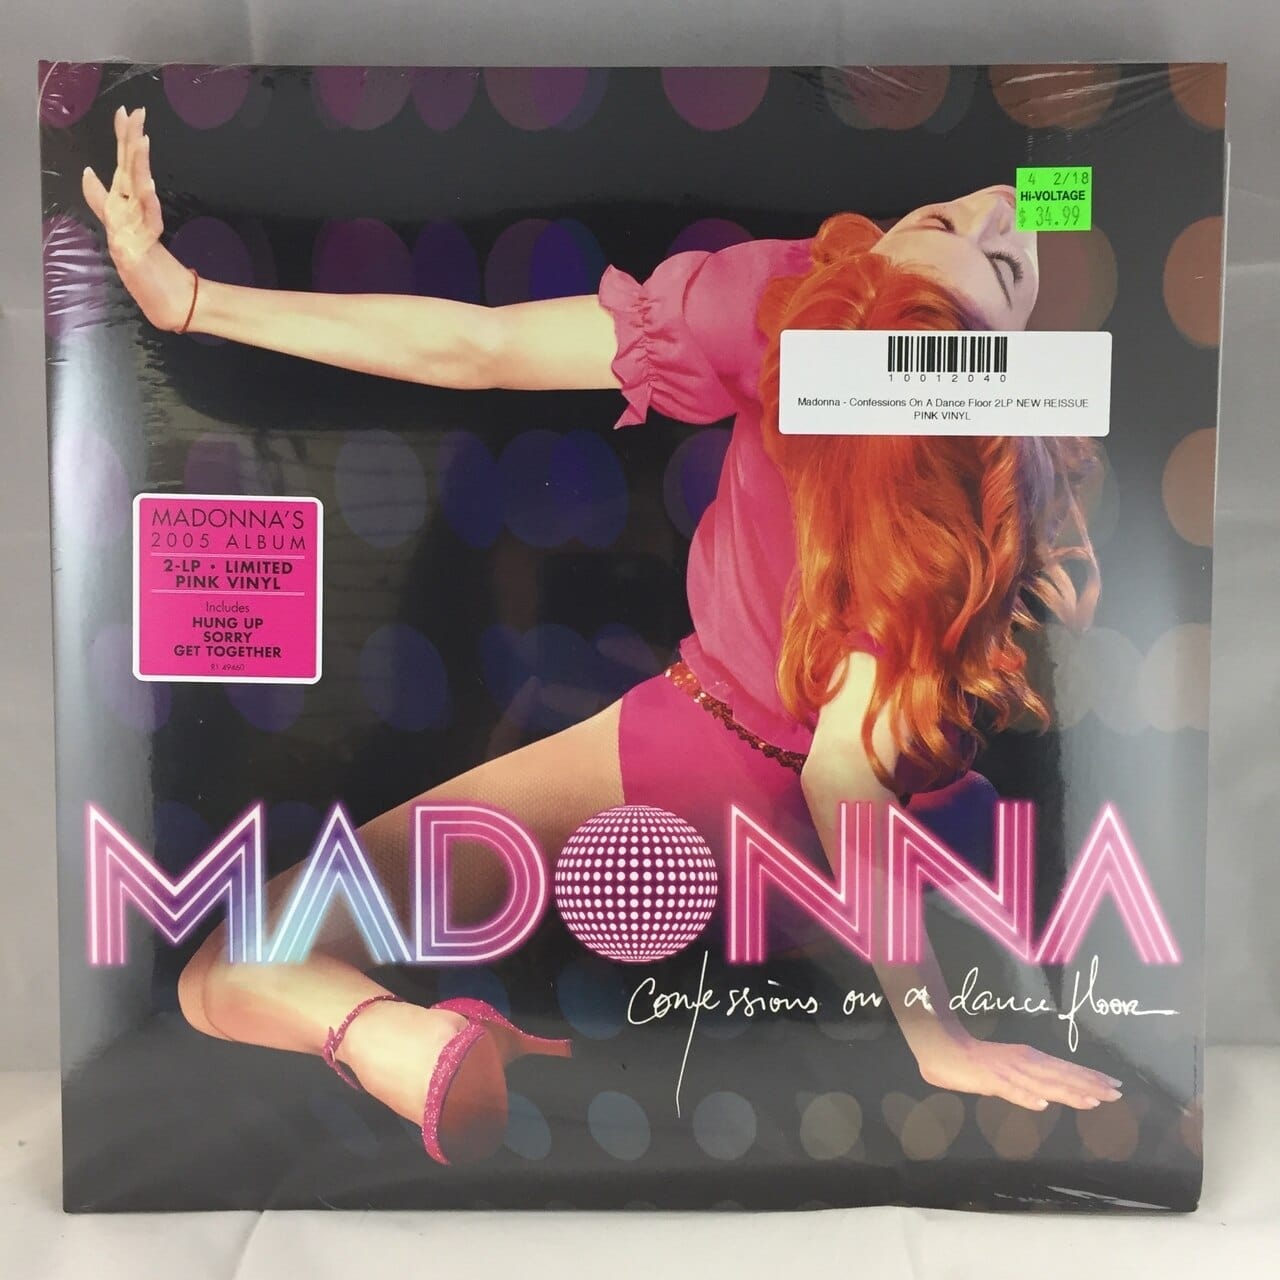 Madonna - Confessions On A Dance Floor 2LP NEW REISSUE PINK VINYL